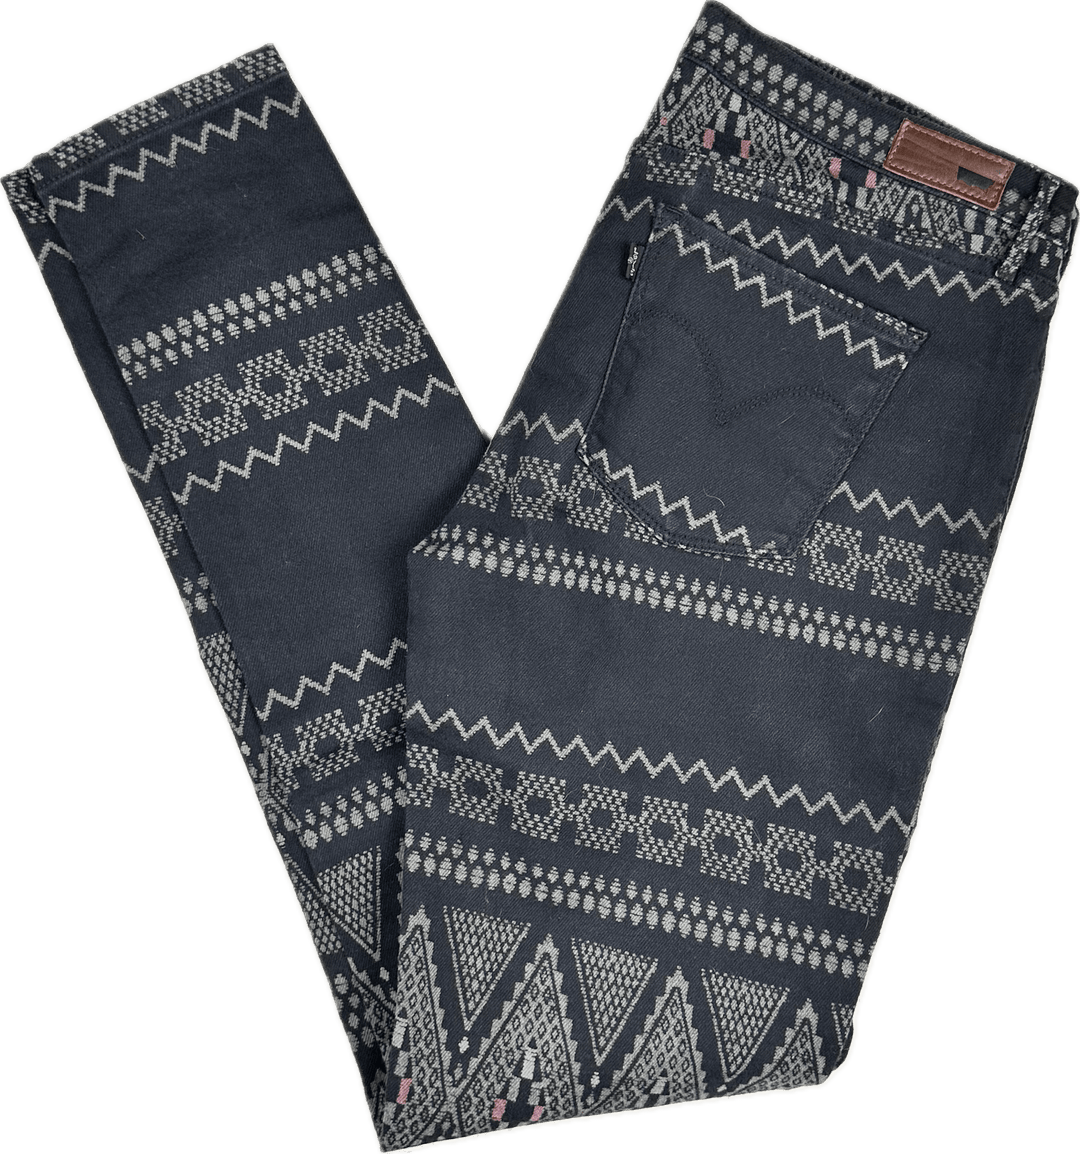 Levis 'Legging' Skinny Aztec Print jeans -Size 30 - Jean Pool